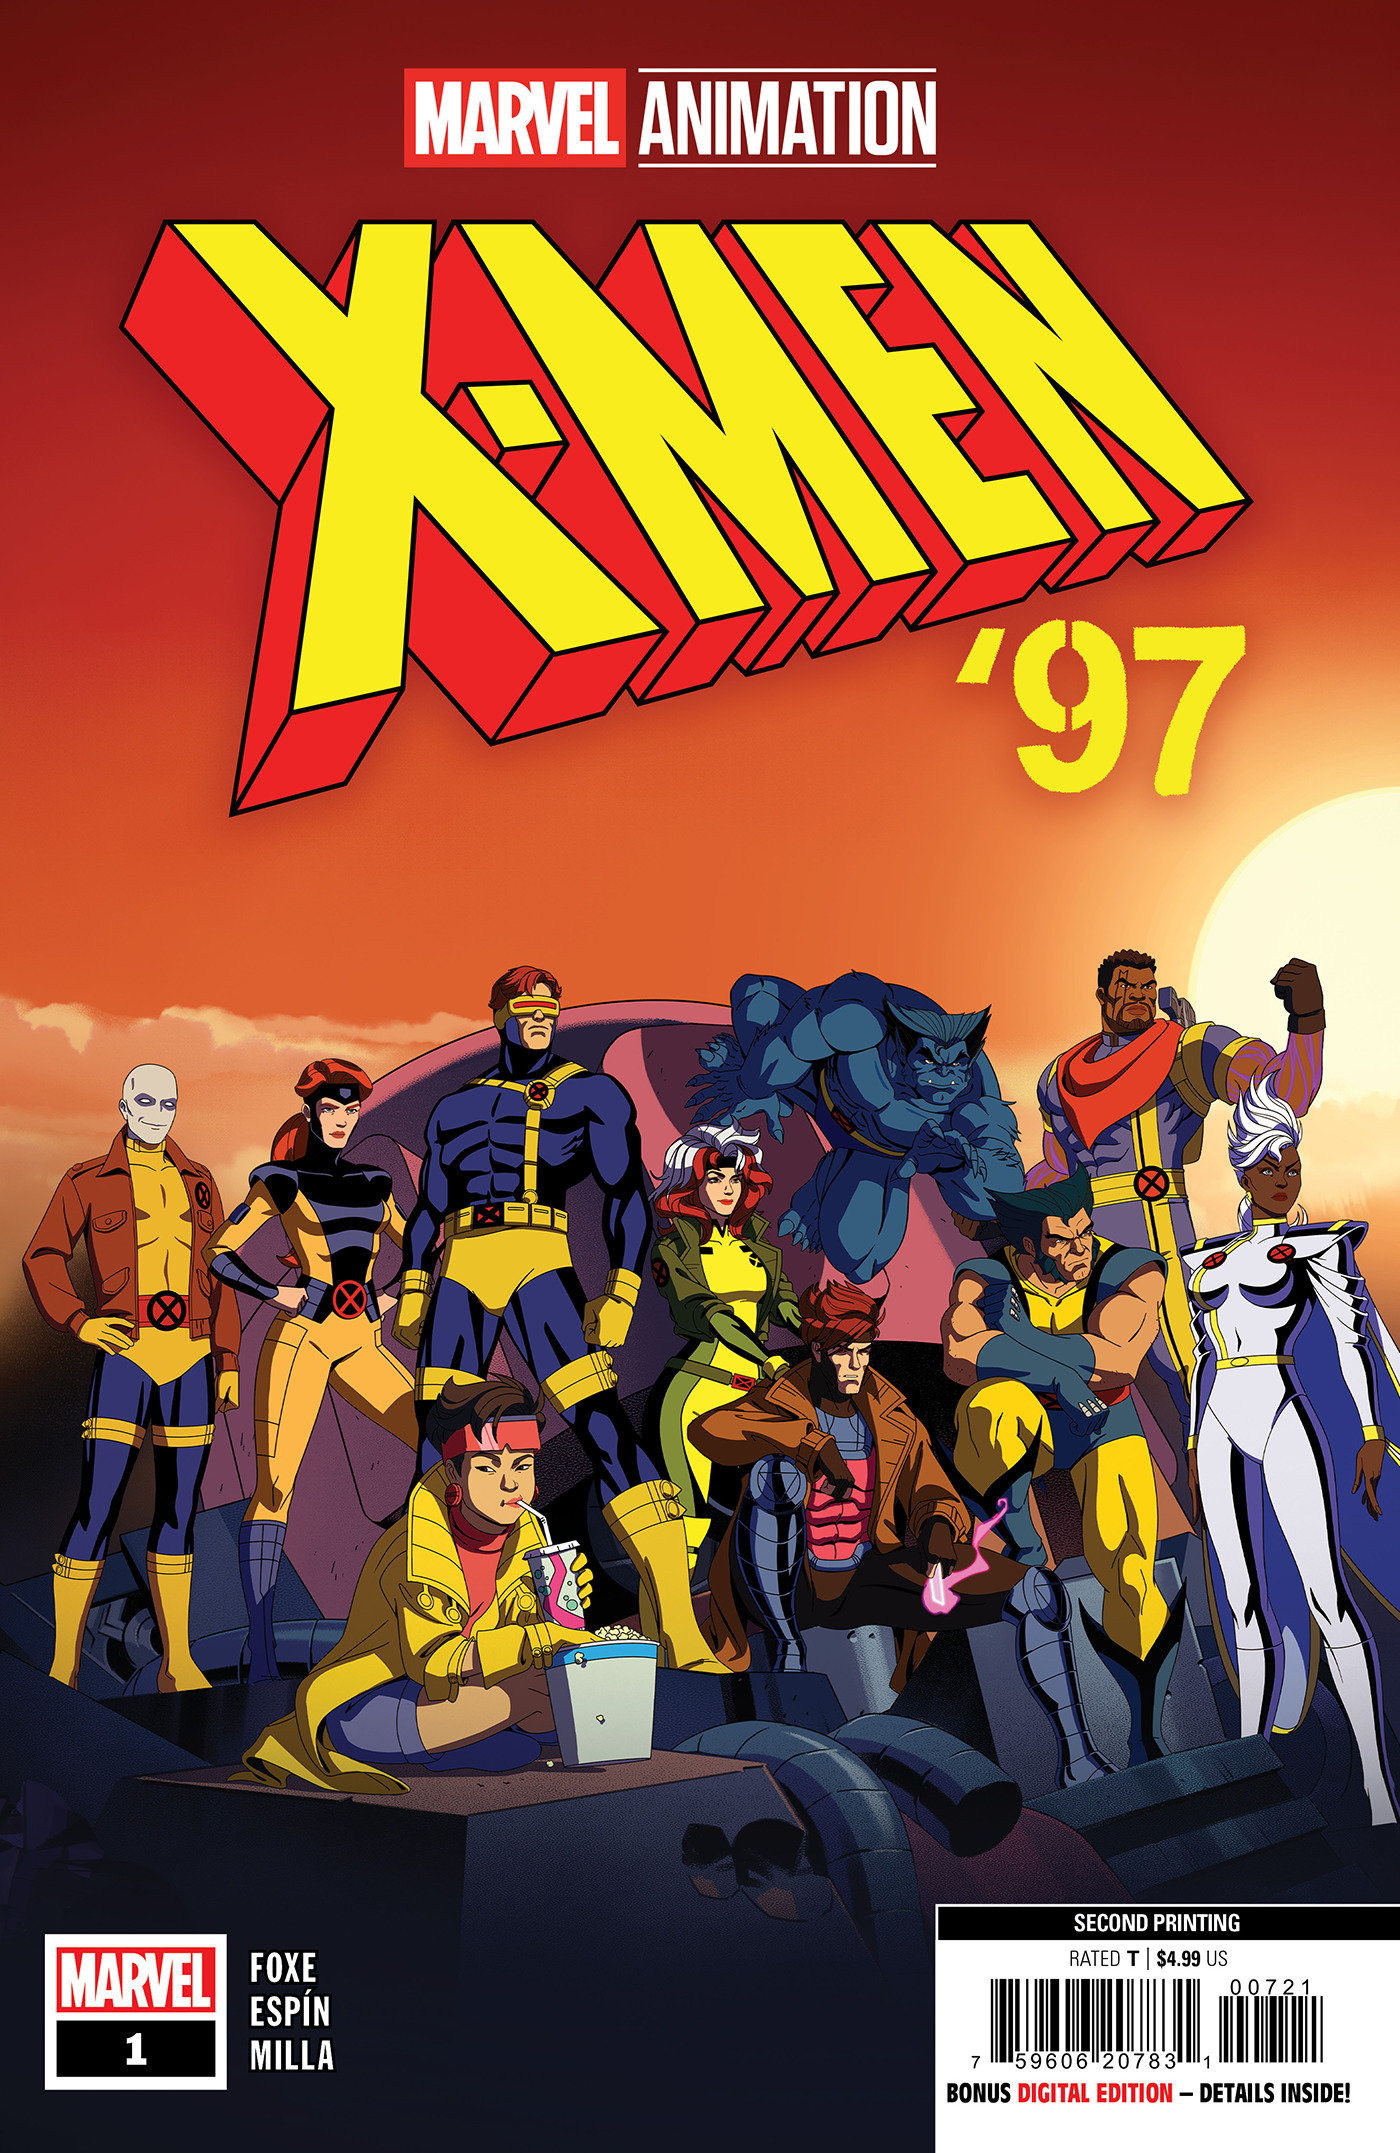 X-Men 97 #1 2nd Printing Marvel Animation Variant